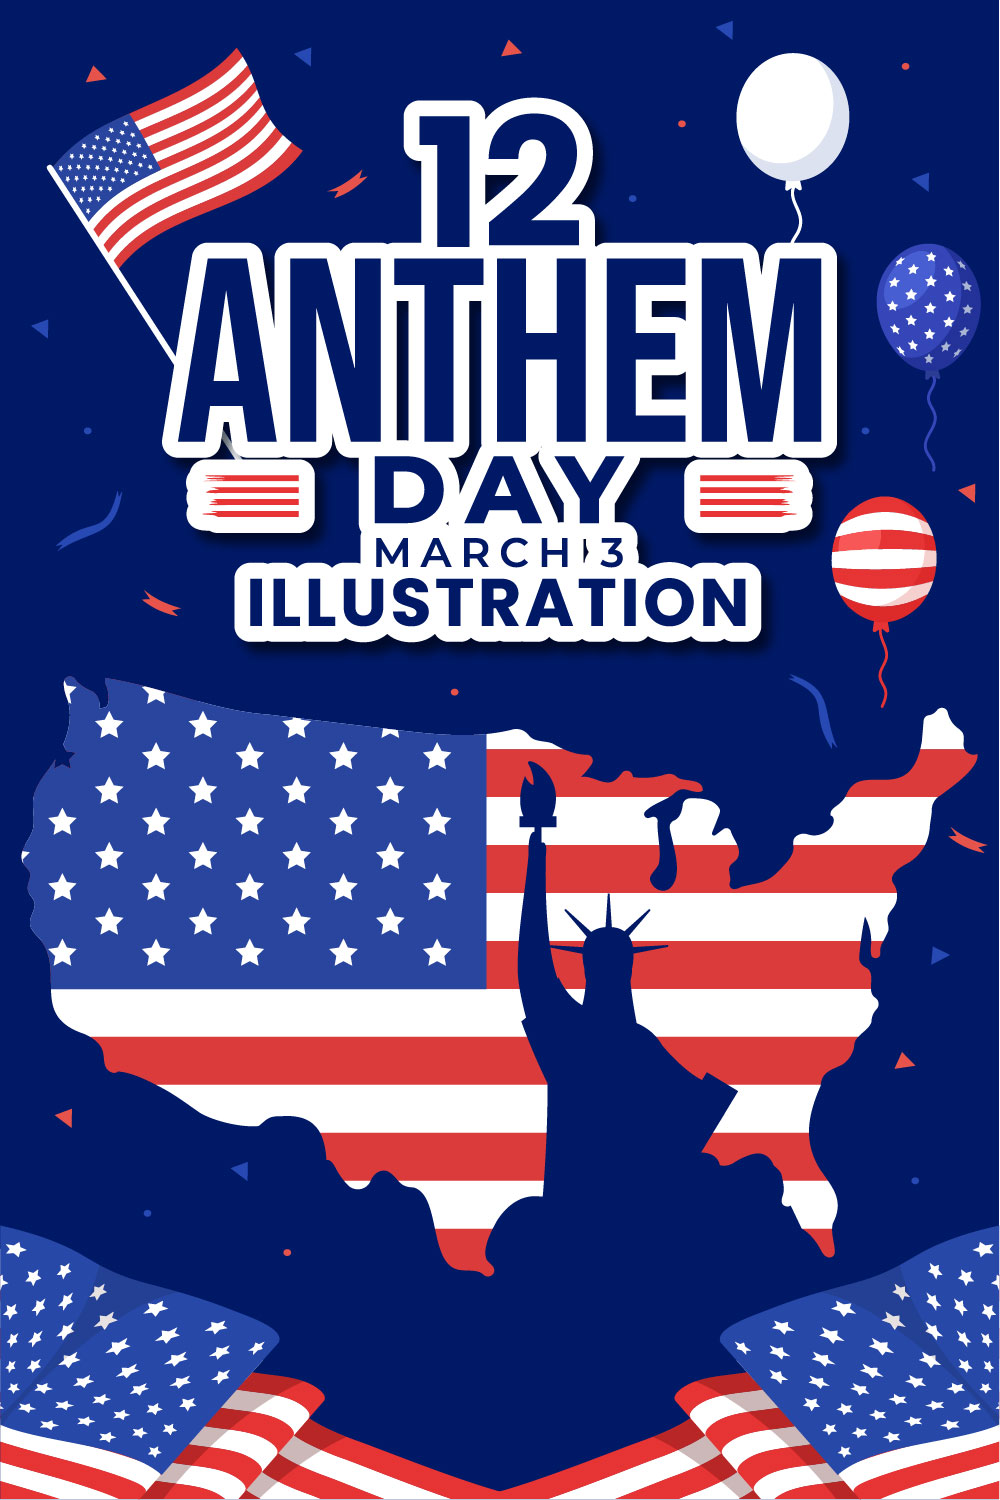 12 National Anthem Day Illustration pinterest preview image.